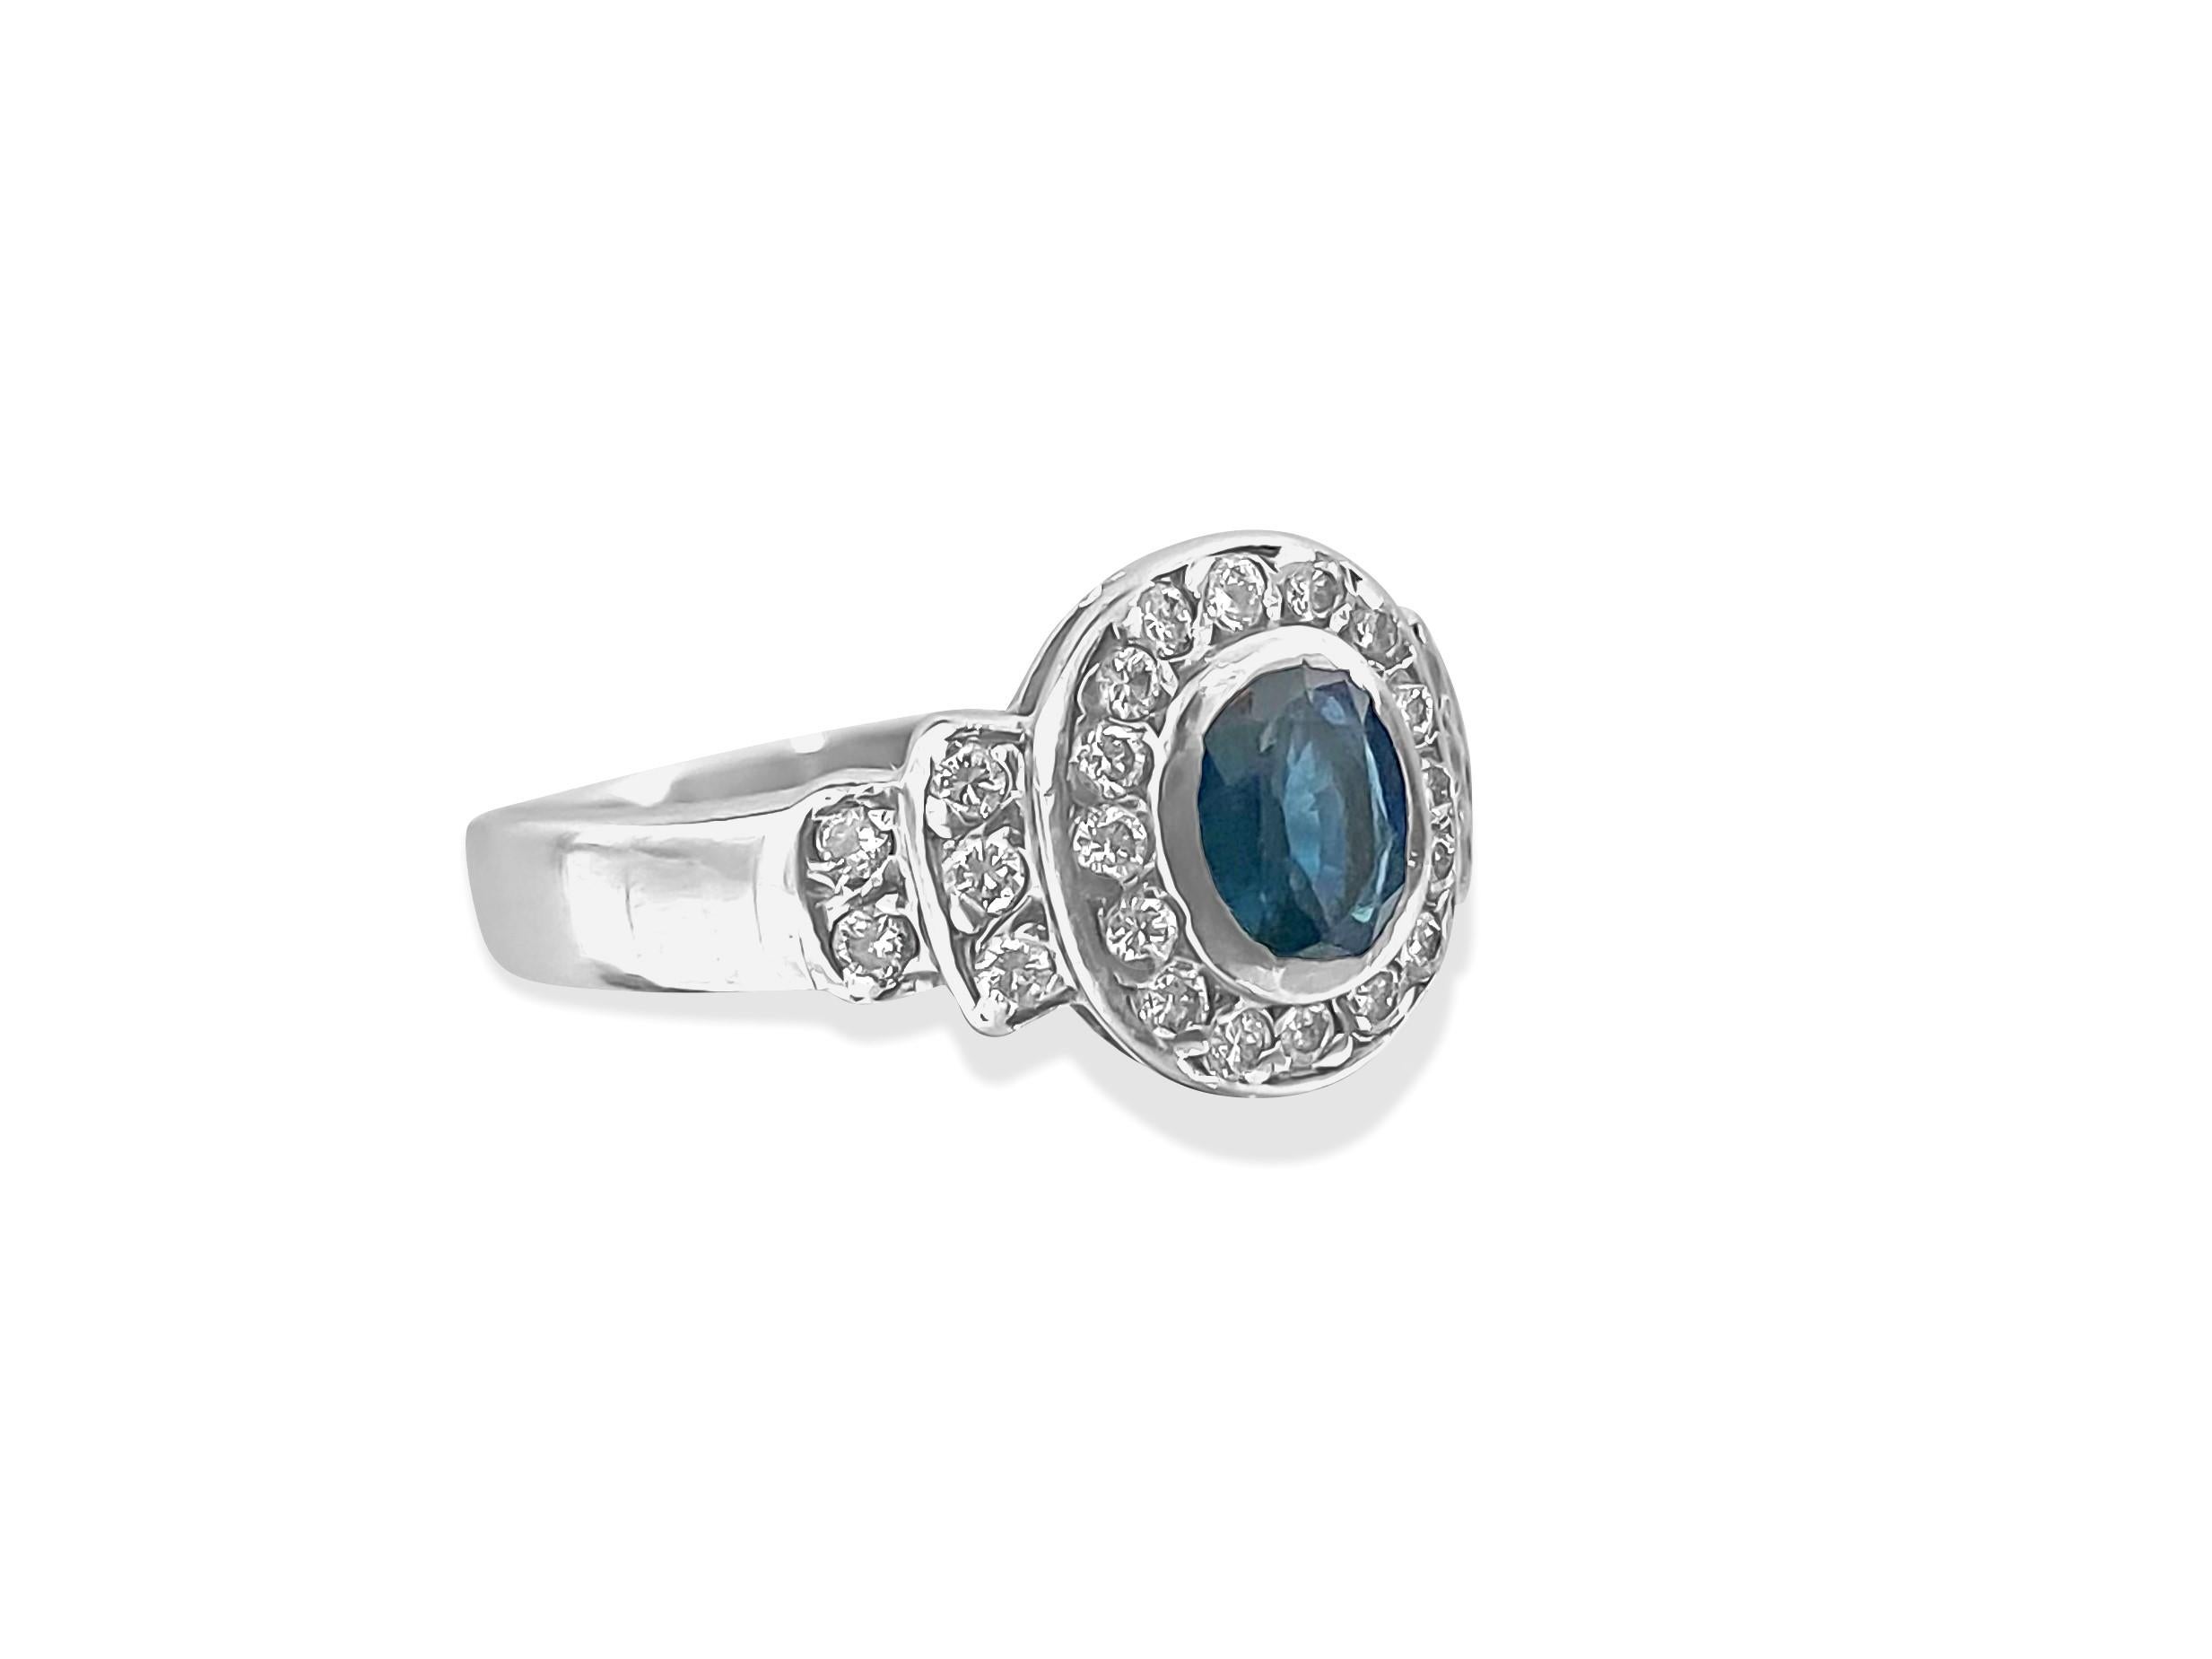 Renaissance Contemporary 2.75 Carat Blue Sapphire Diamond Cocktail Ring